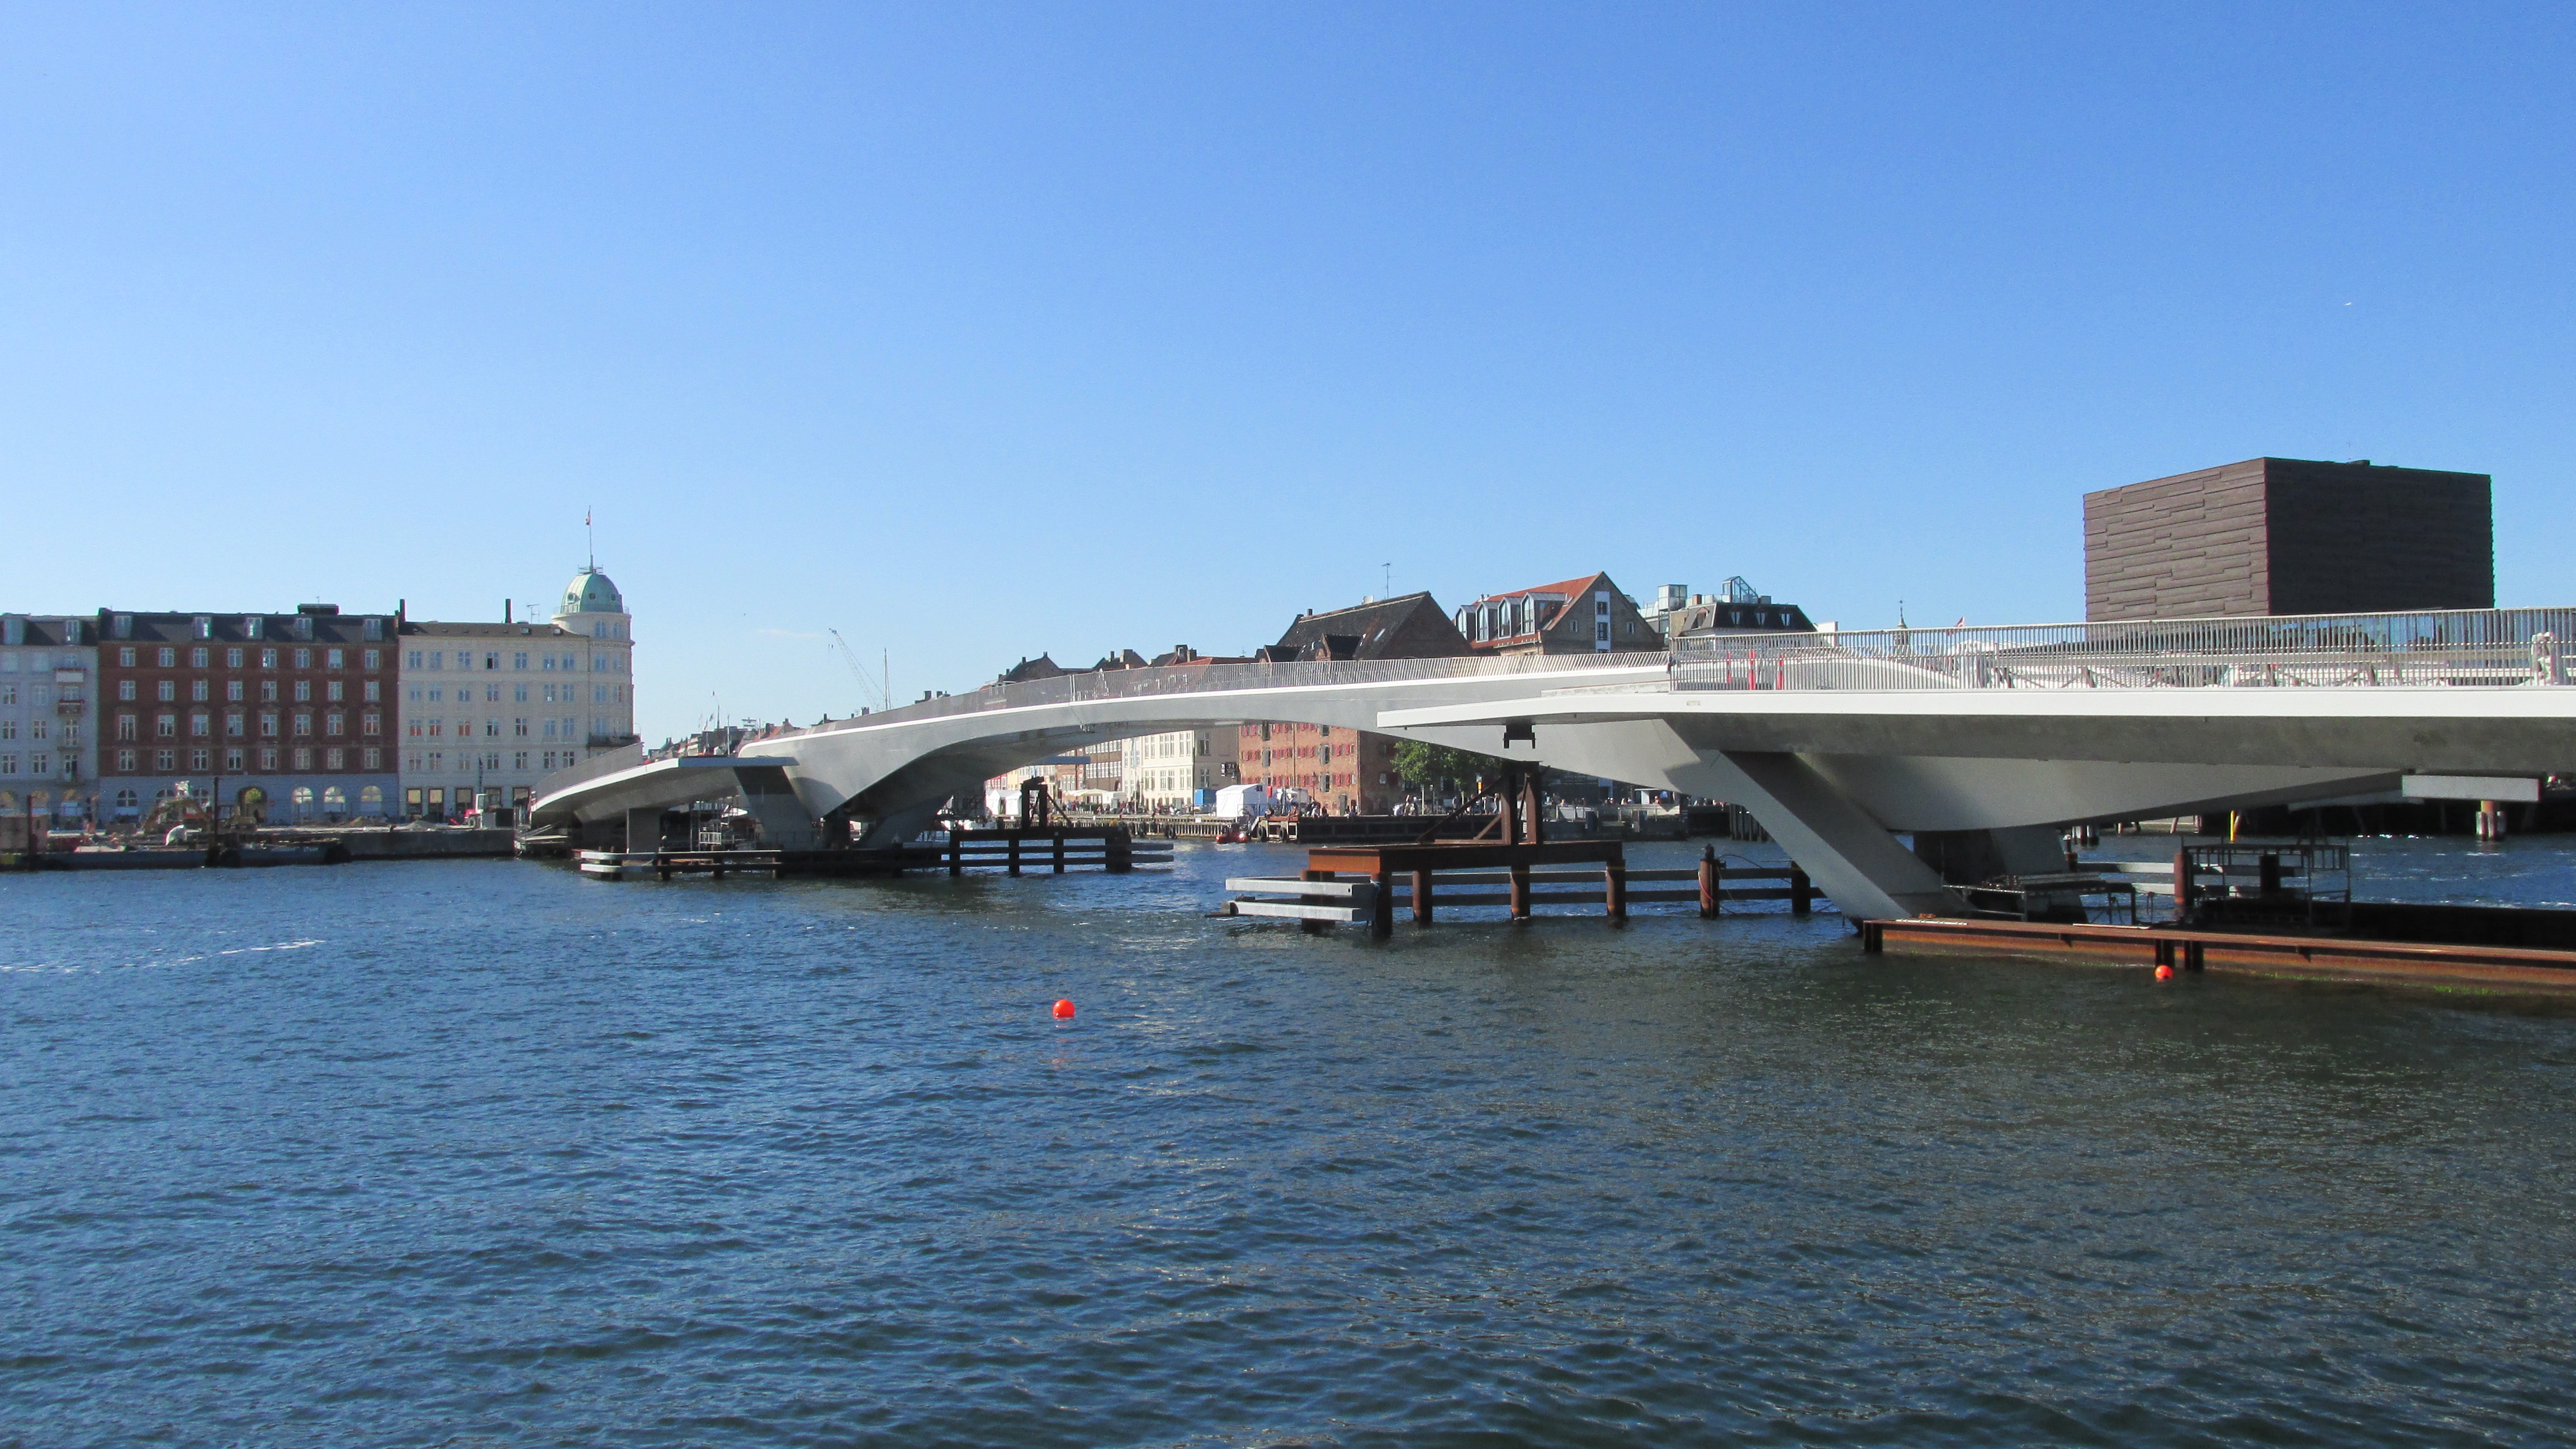 Inderhavnen Bridge. Hardesty & Hanover teamed with UK-based Studio Bednarski and Flint & Neill to win the international competition to design the new Inderhavnen Bridge, in Copenhagen, Denmark.